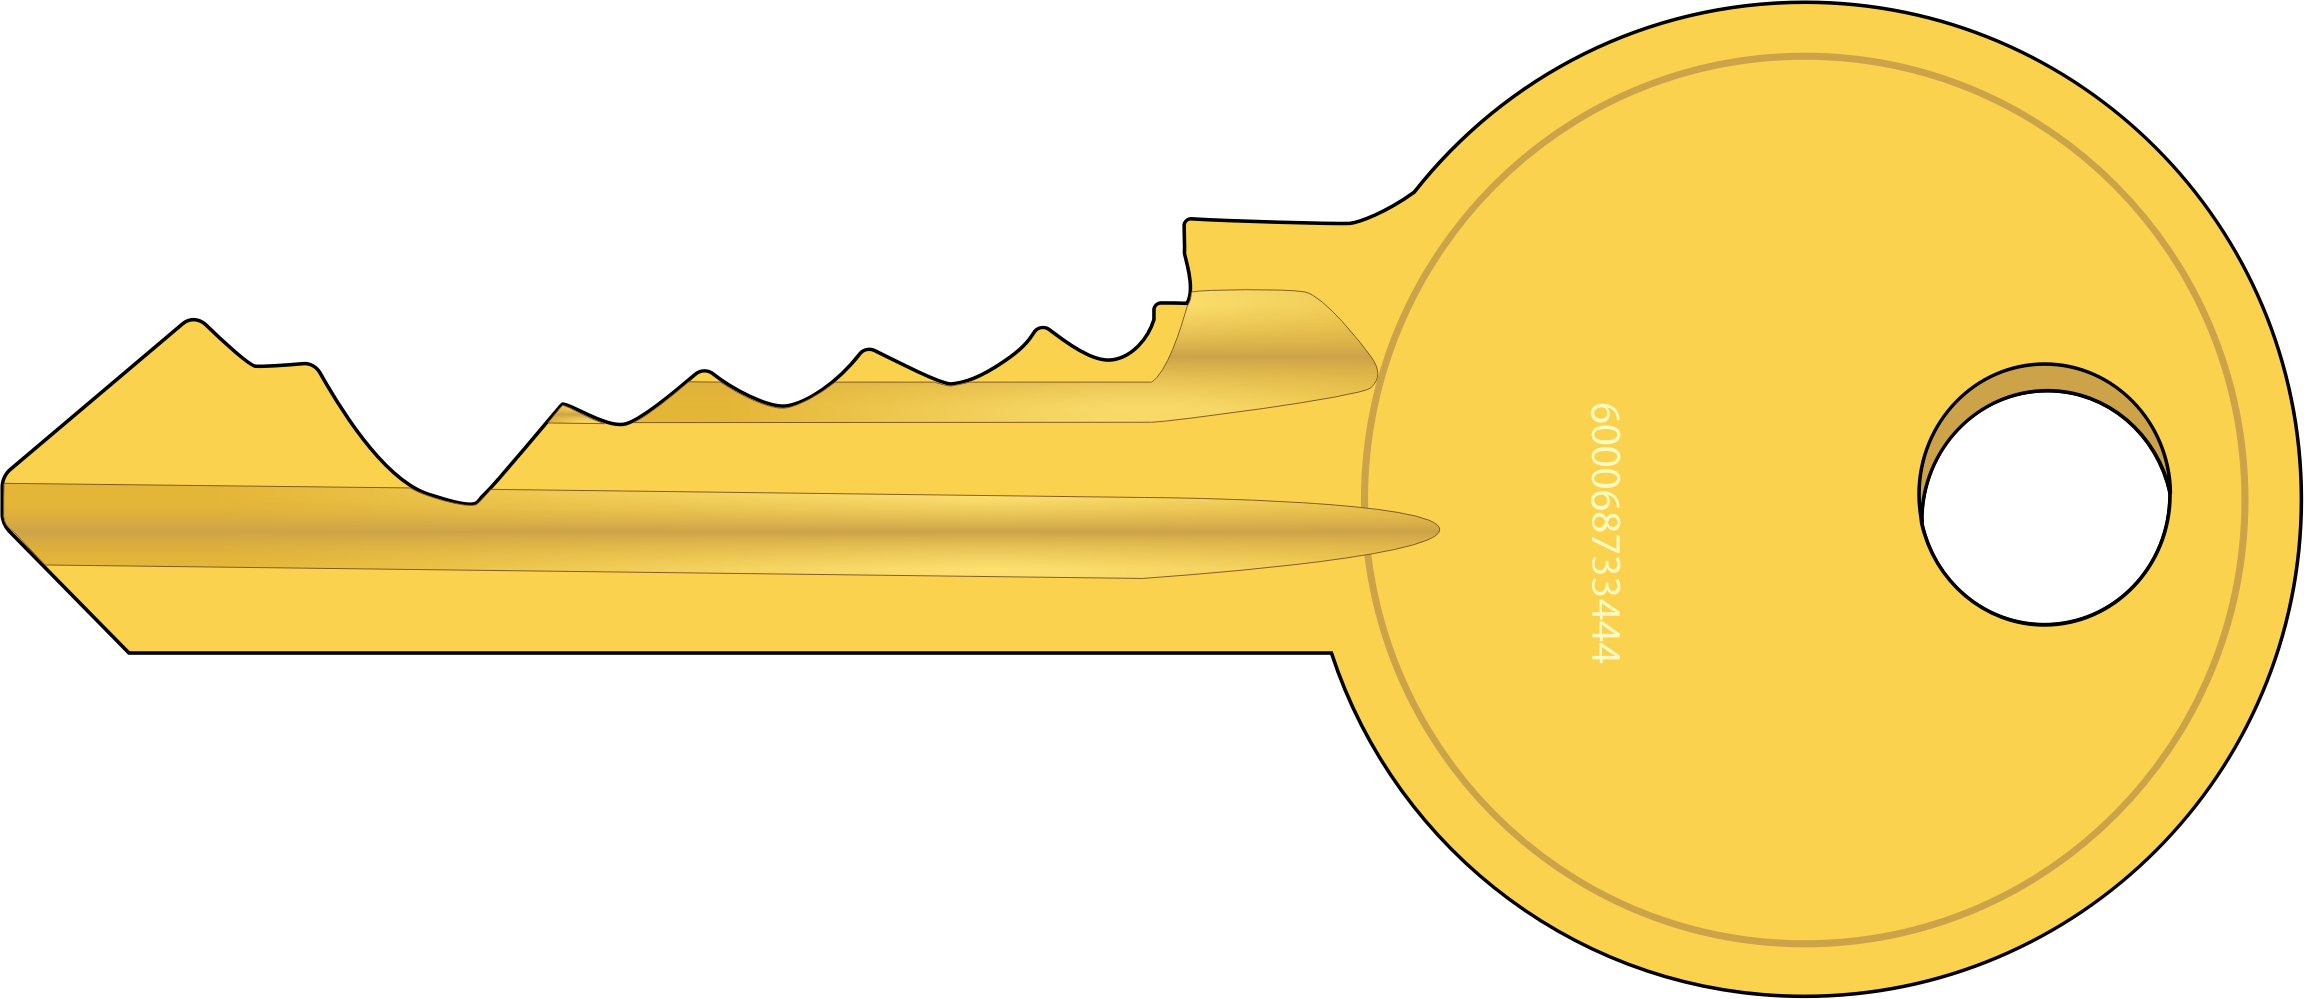 lock-and-key-clipart-clipart-kid-clipartix